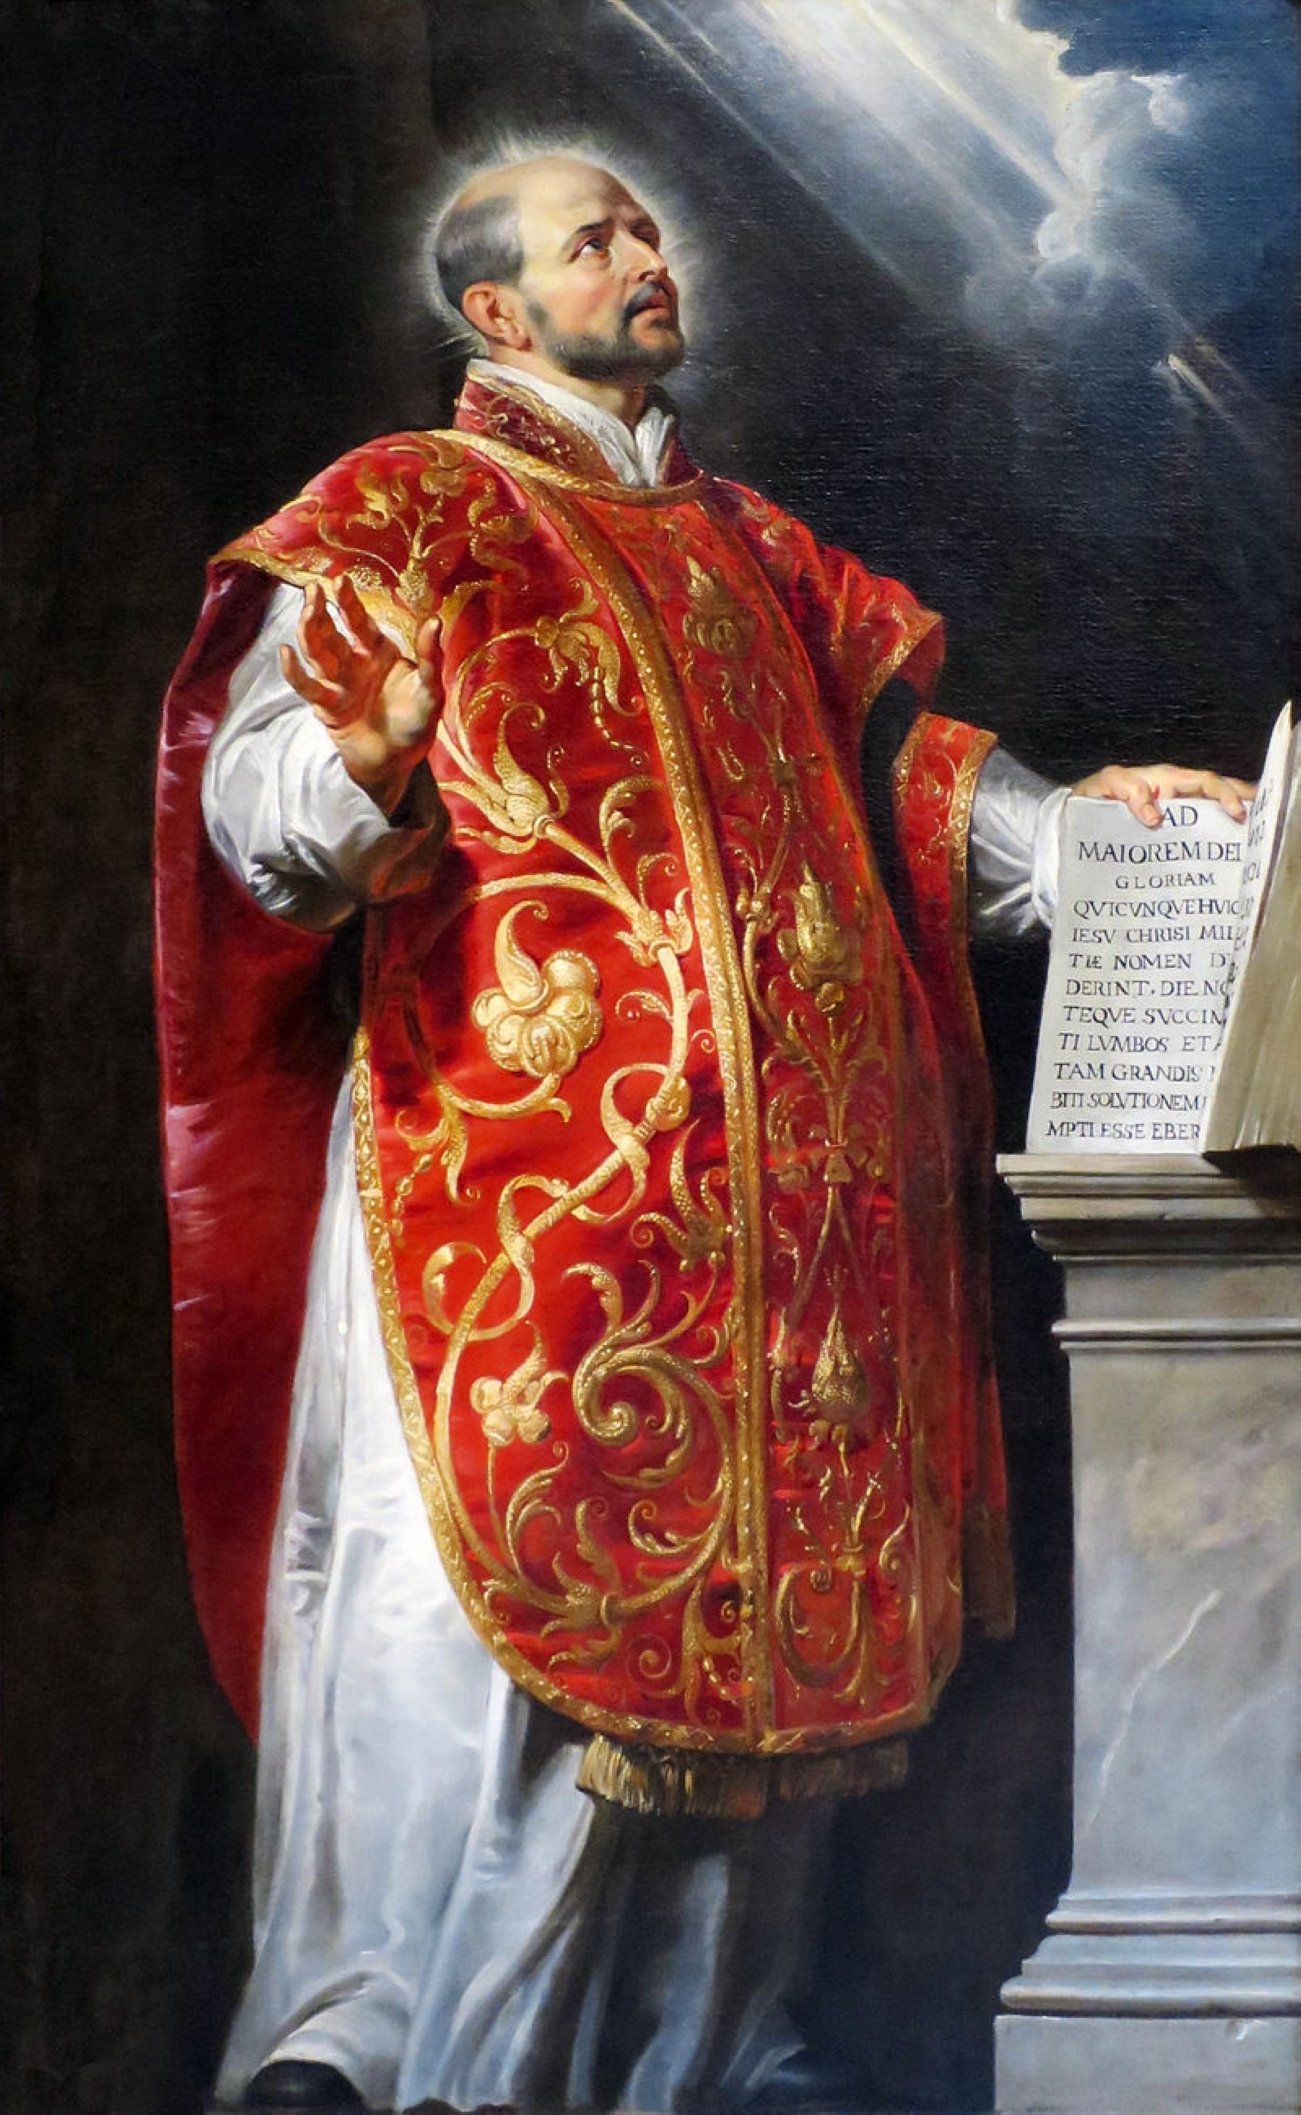 A portrait of Ignatius of Loyola by Pieter Paul Rubens. (Wikimedia)